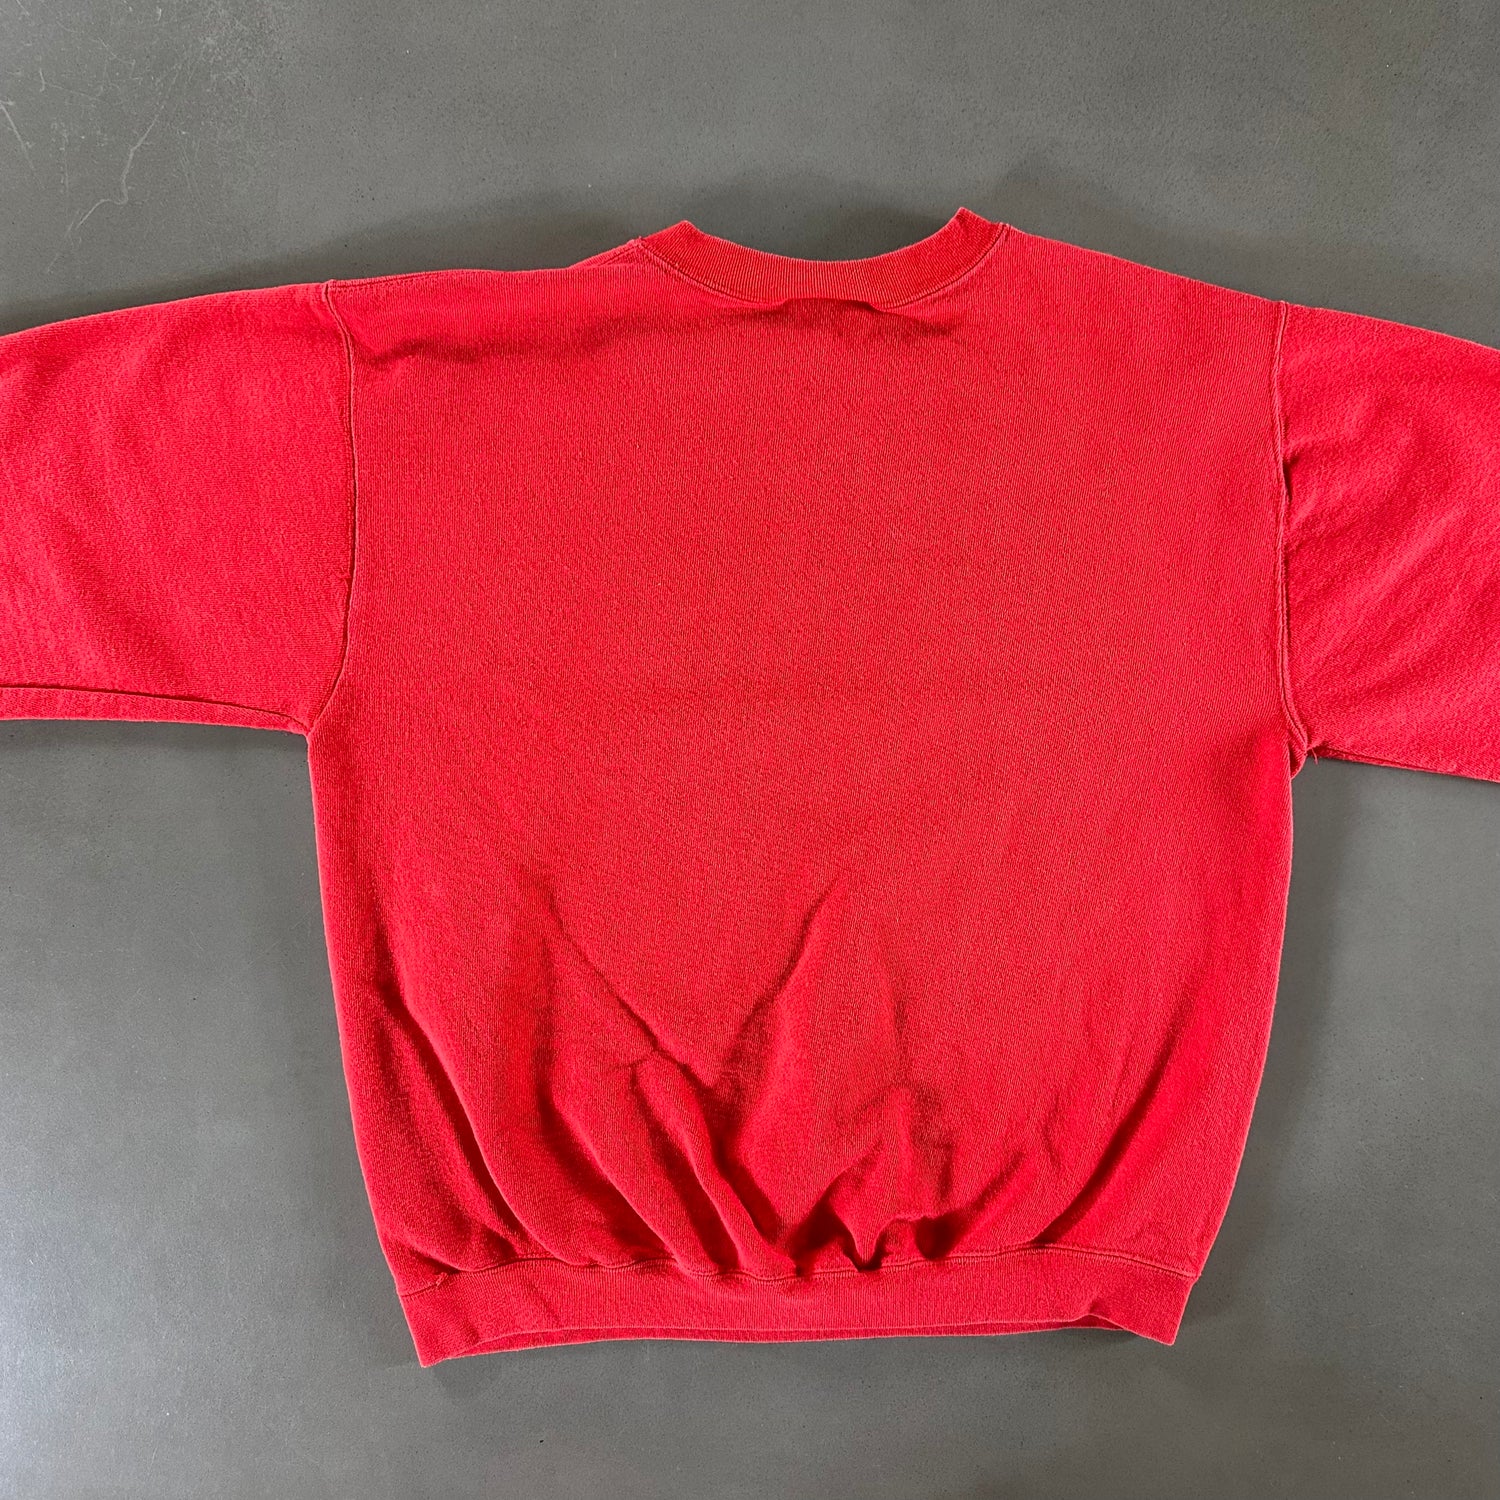 Vintage 1990s Las Vegas Sweatshirt size Small